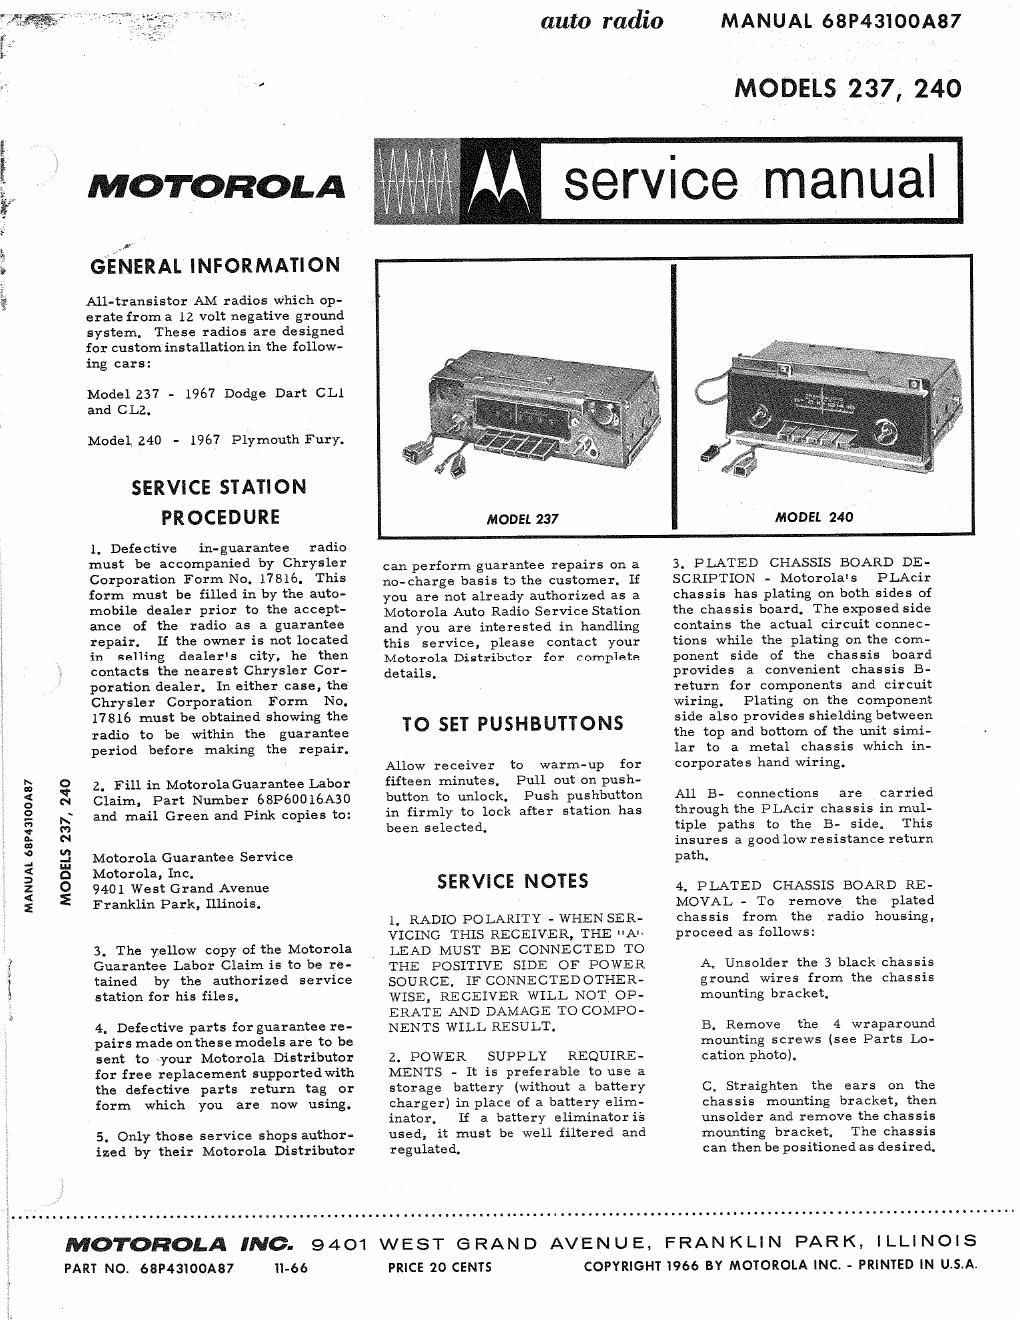 motorola 240 service manual